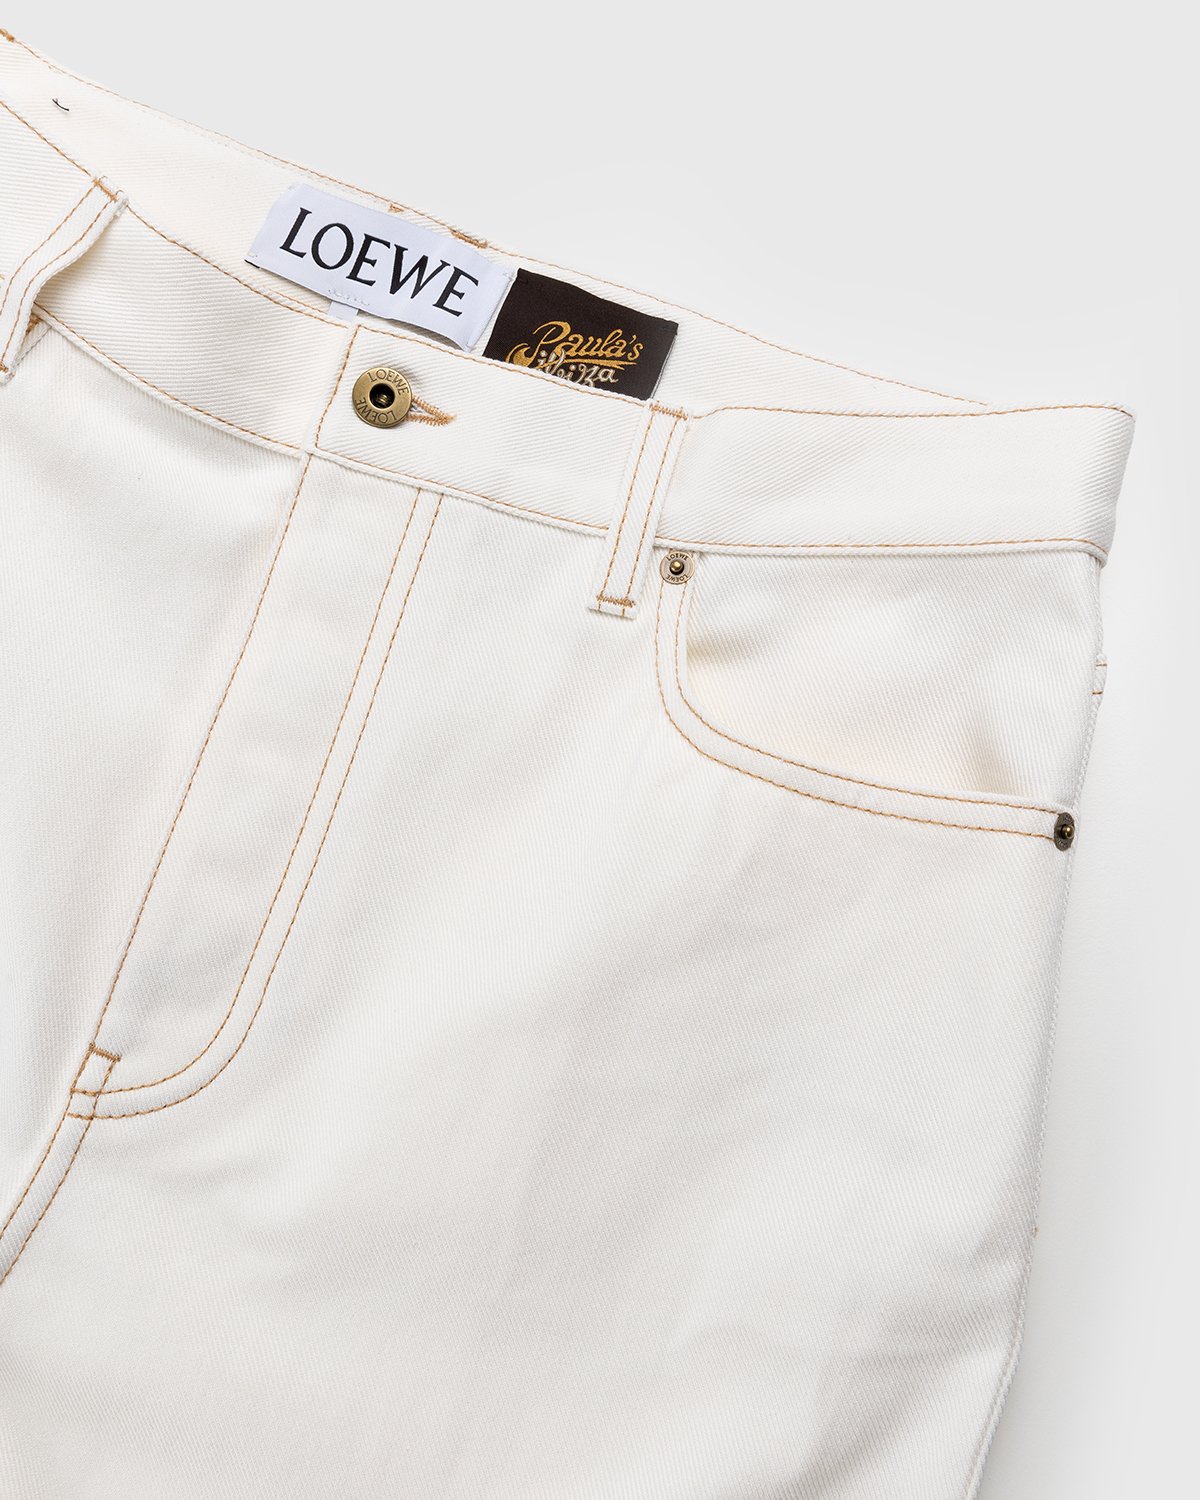 Loewe - Paula's Ibiza Boot Cut Denim Trousers White - Clothing - White - Image 4